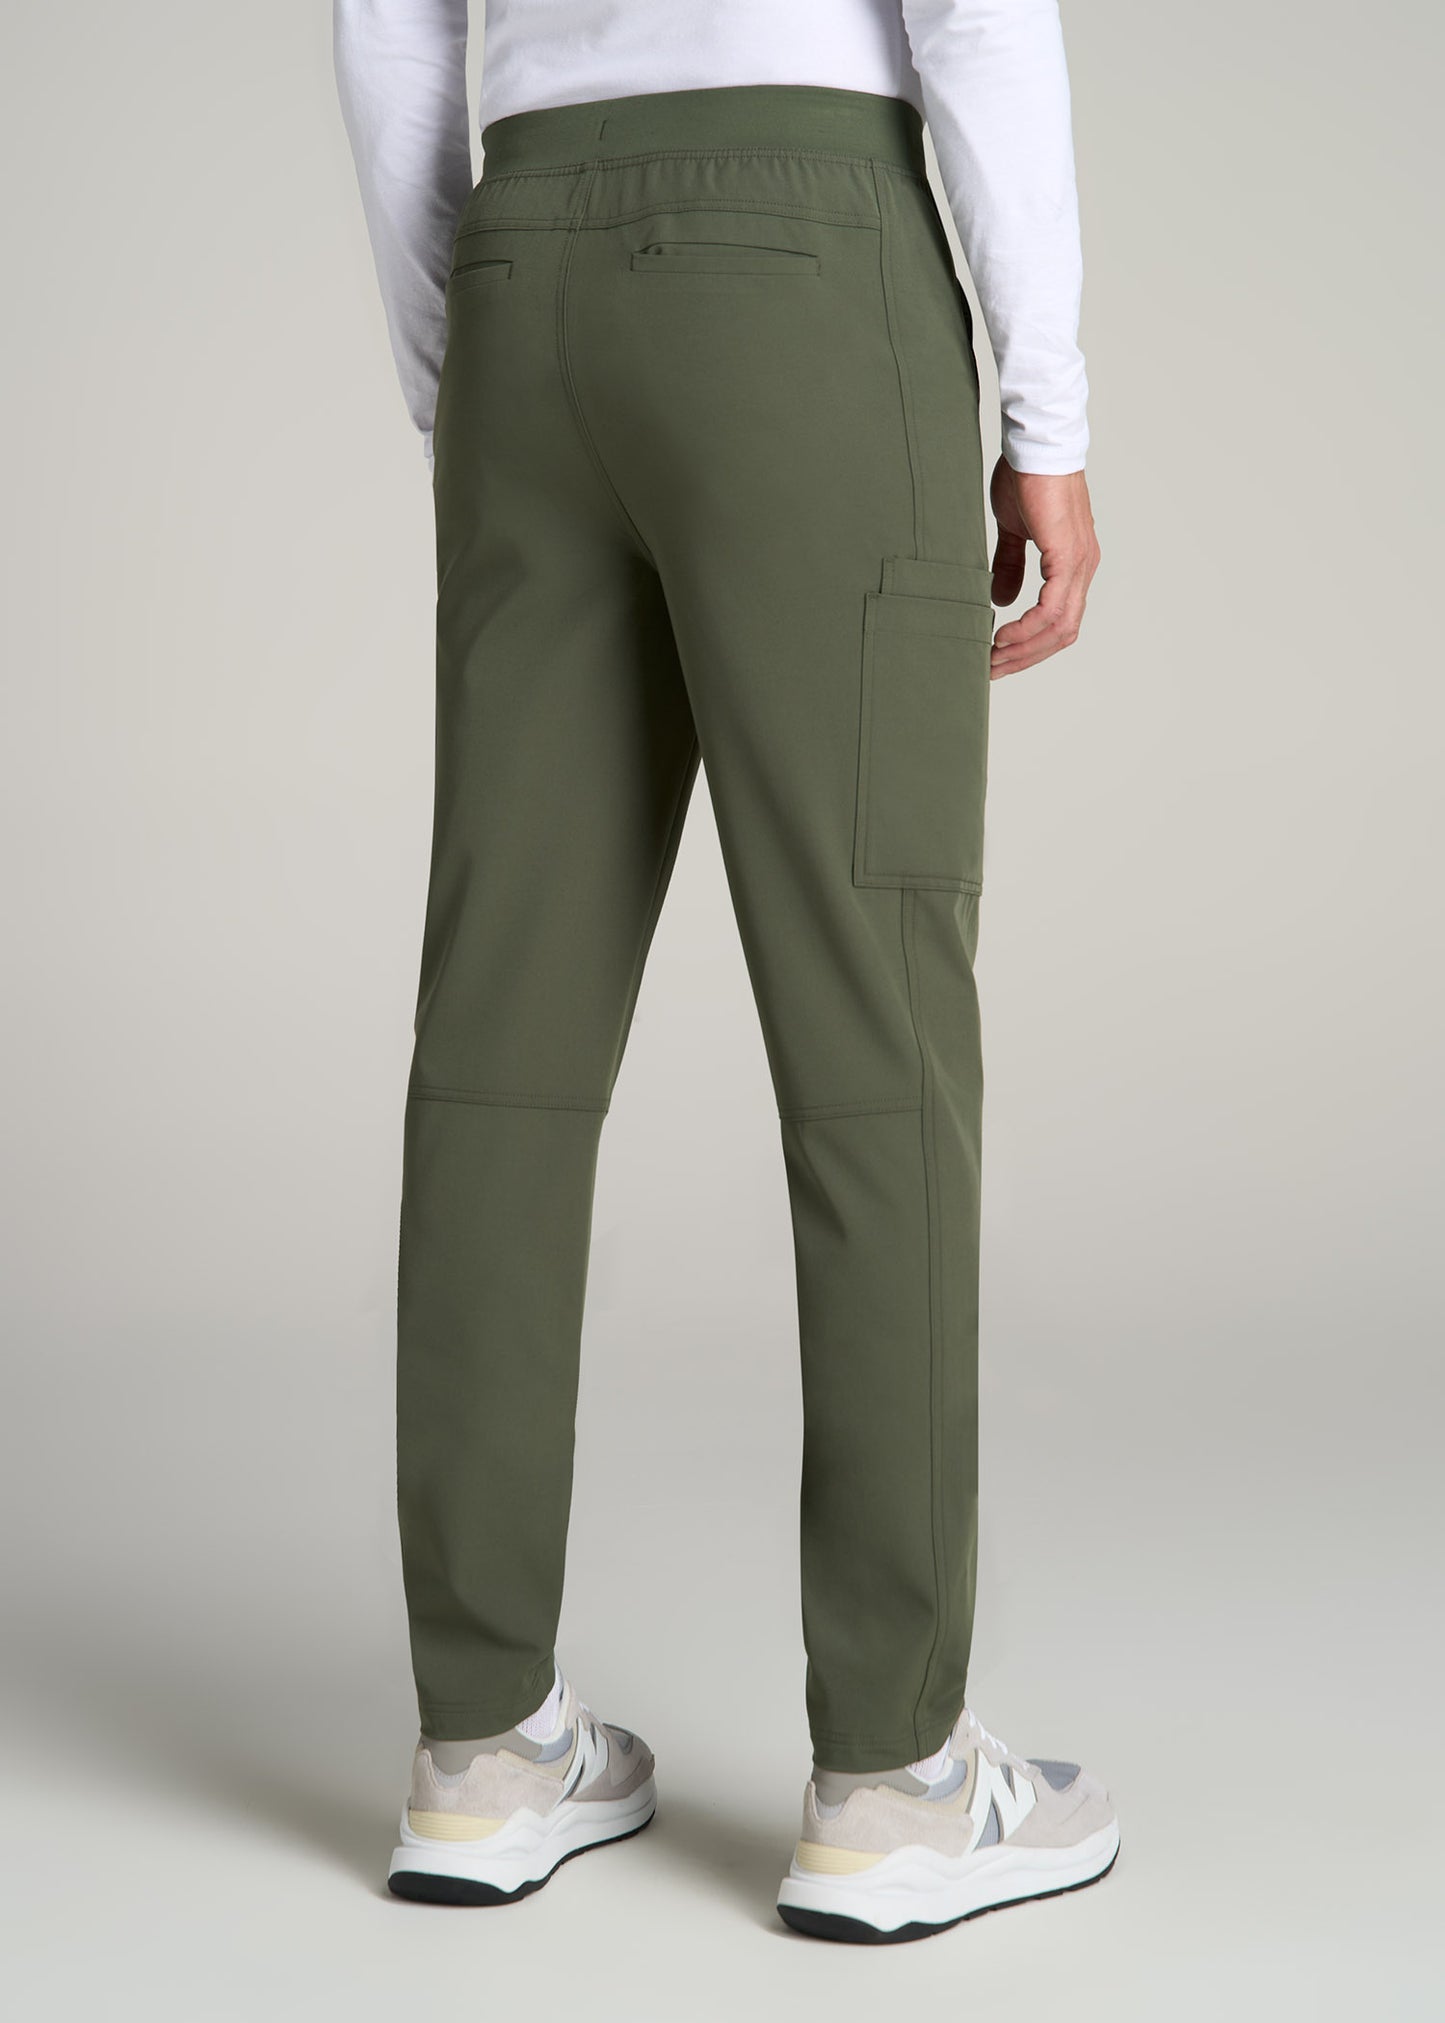 Cargo Scrub Pants for Tall Men in Clover Green